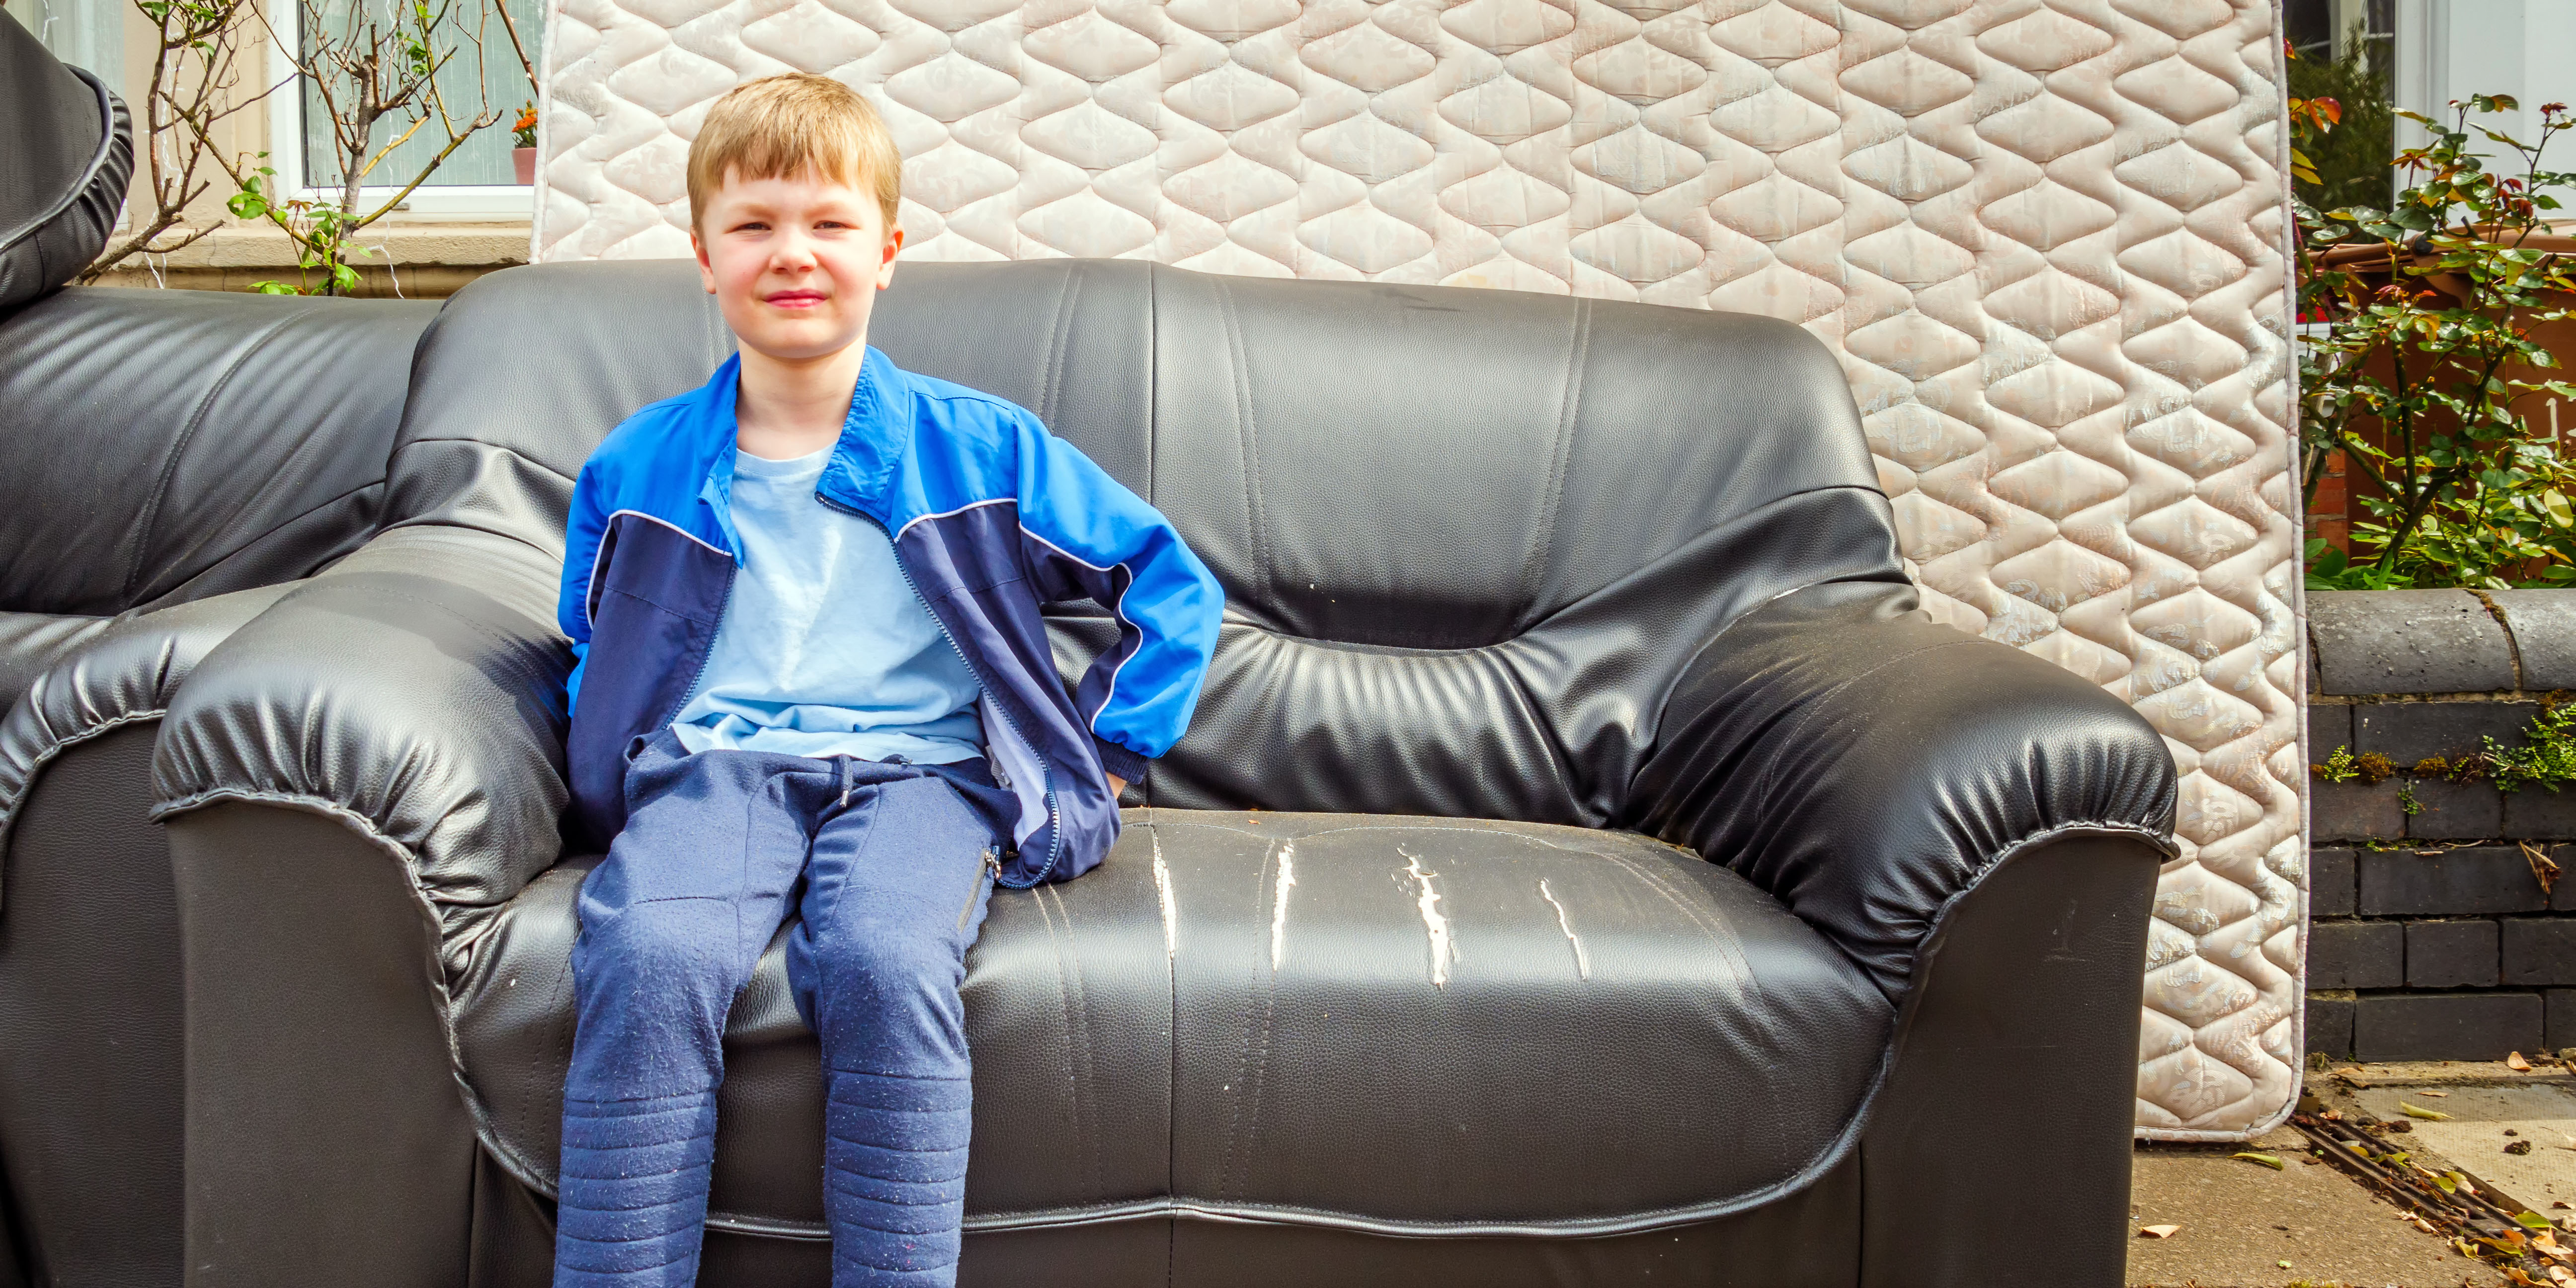 Boy sitting on a sofa | Source: Shutterstock